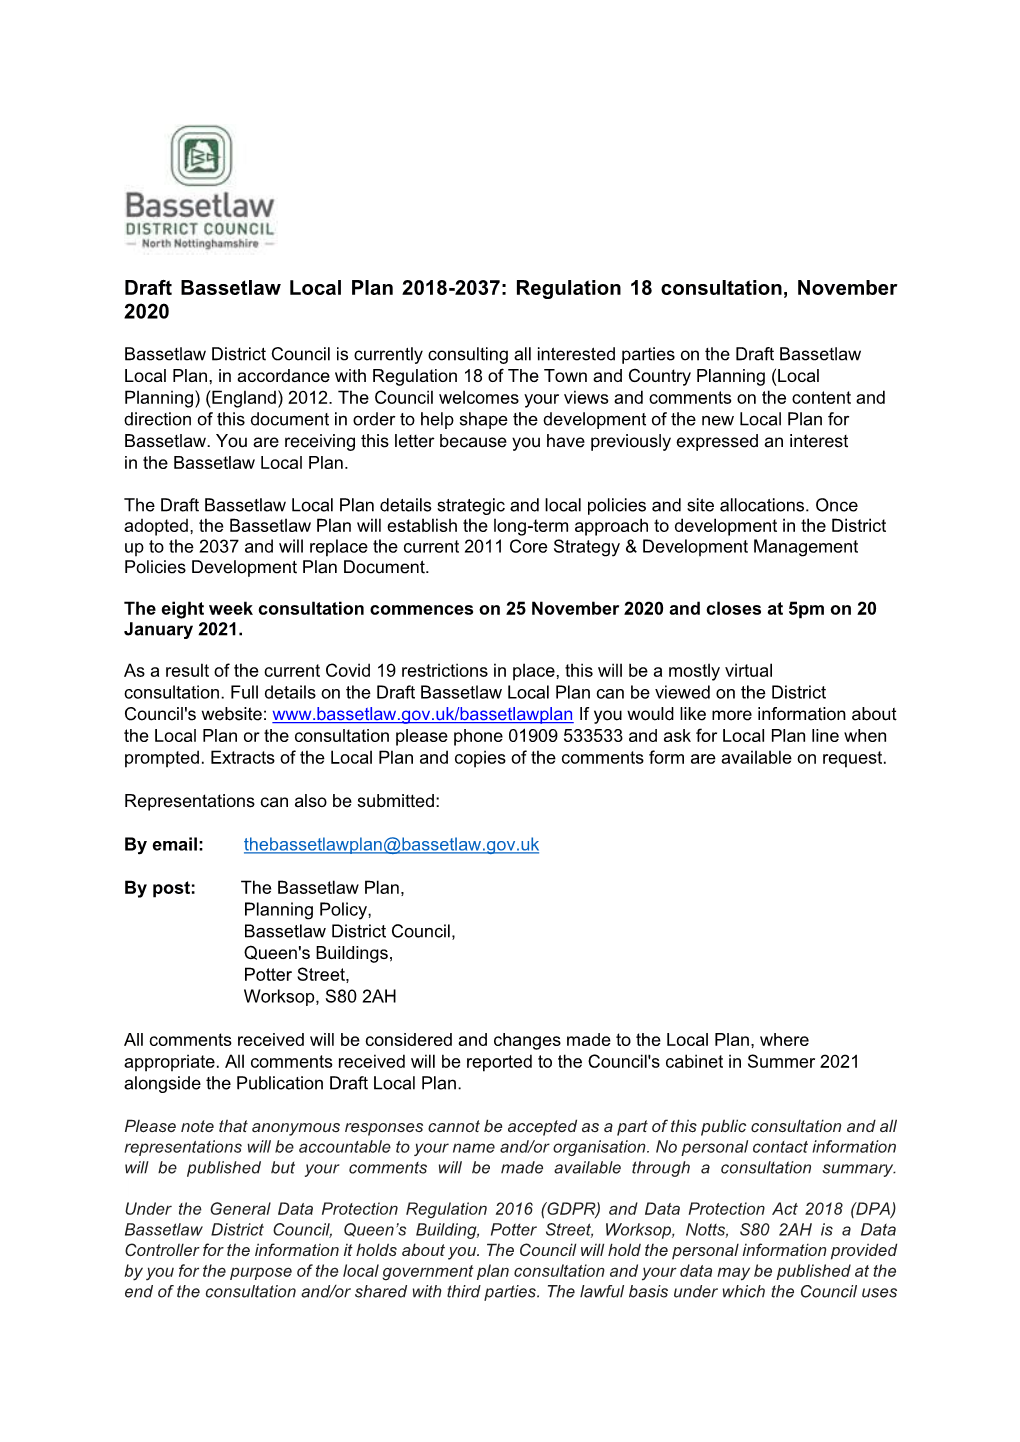 Draft Bassetlaw Local Plan 2018-2037: Regulation 18 Consultation, November 2020